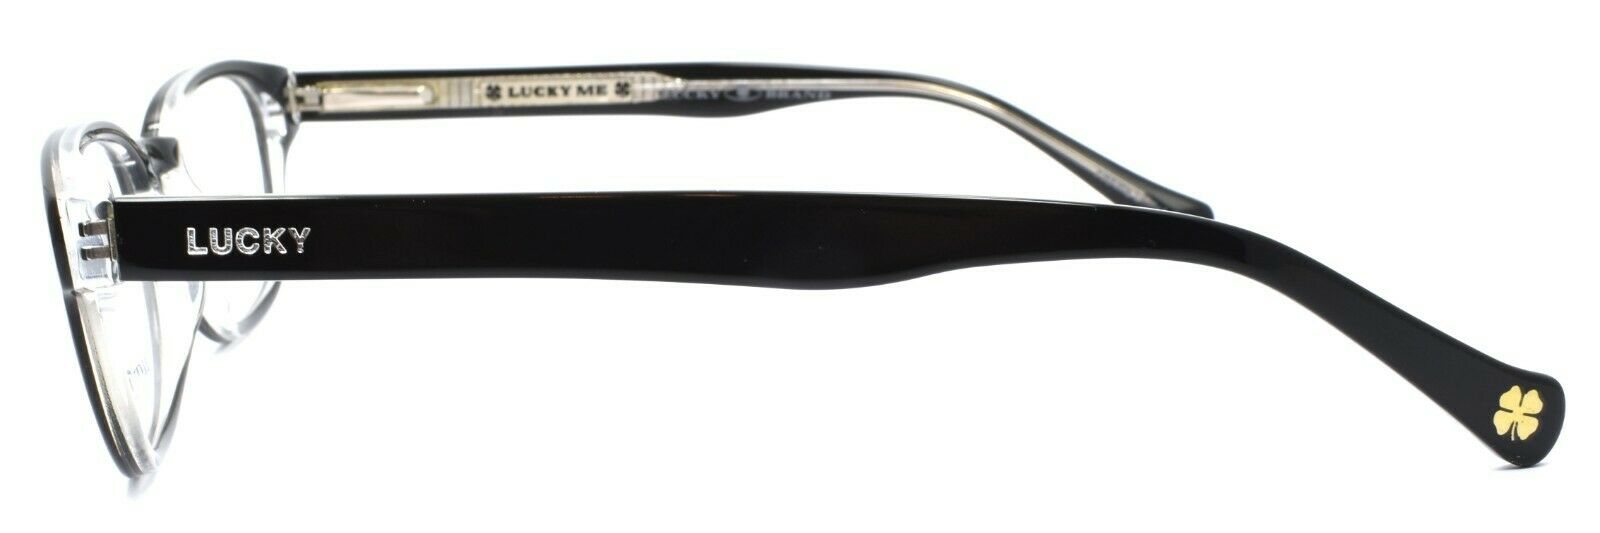 3-LUCKY BRAND Dynamo Kids Unisex Eyeglasses Frames 45-16-130 Black + CASE-751286246308-IKSpecs